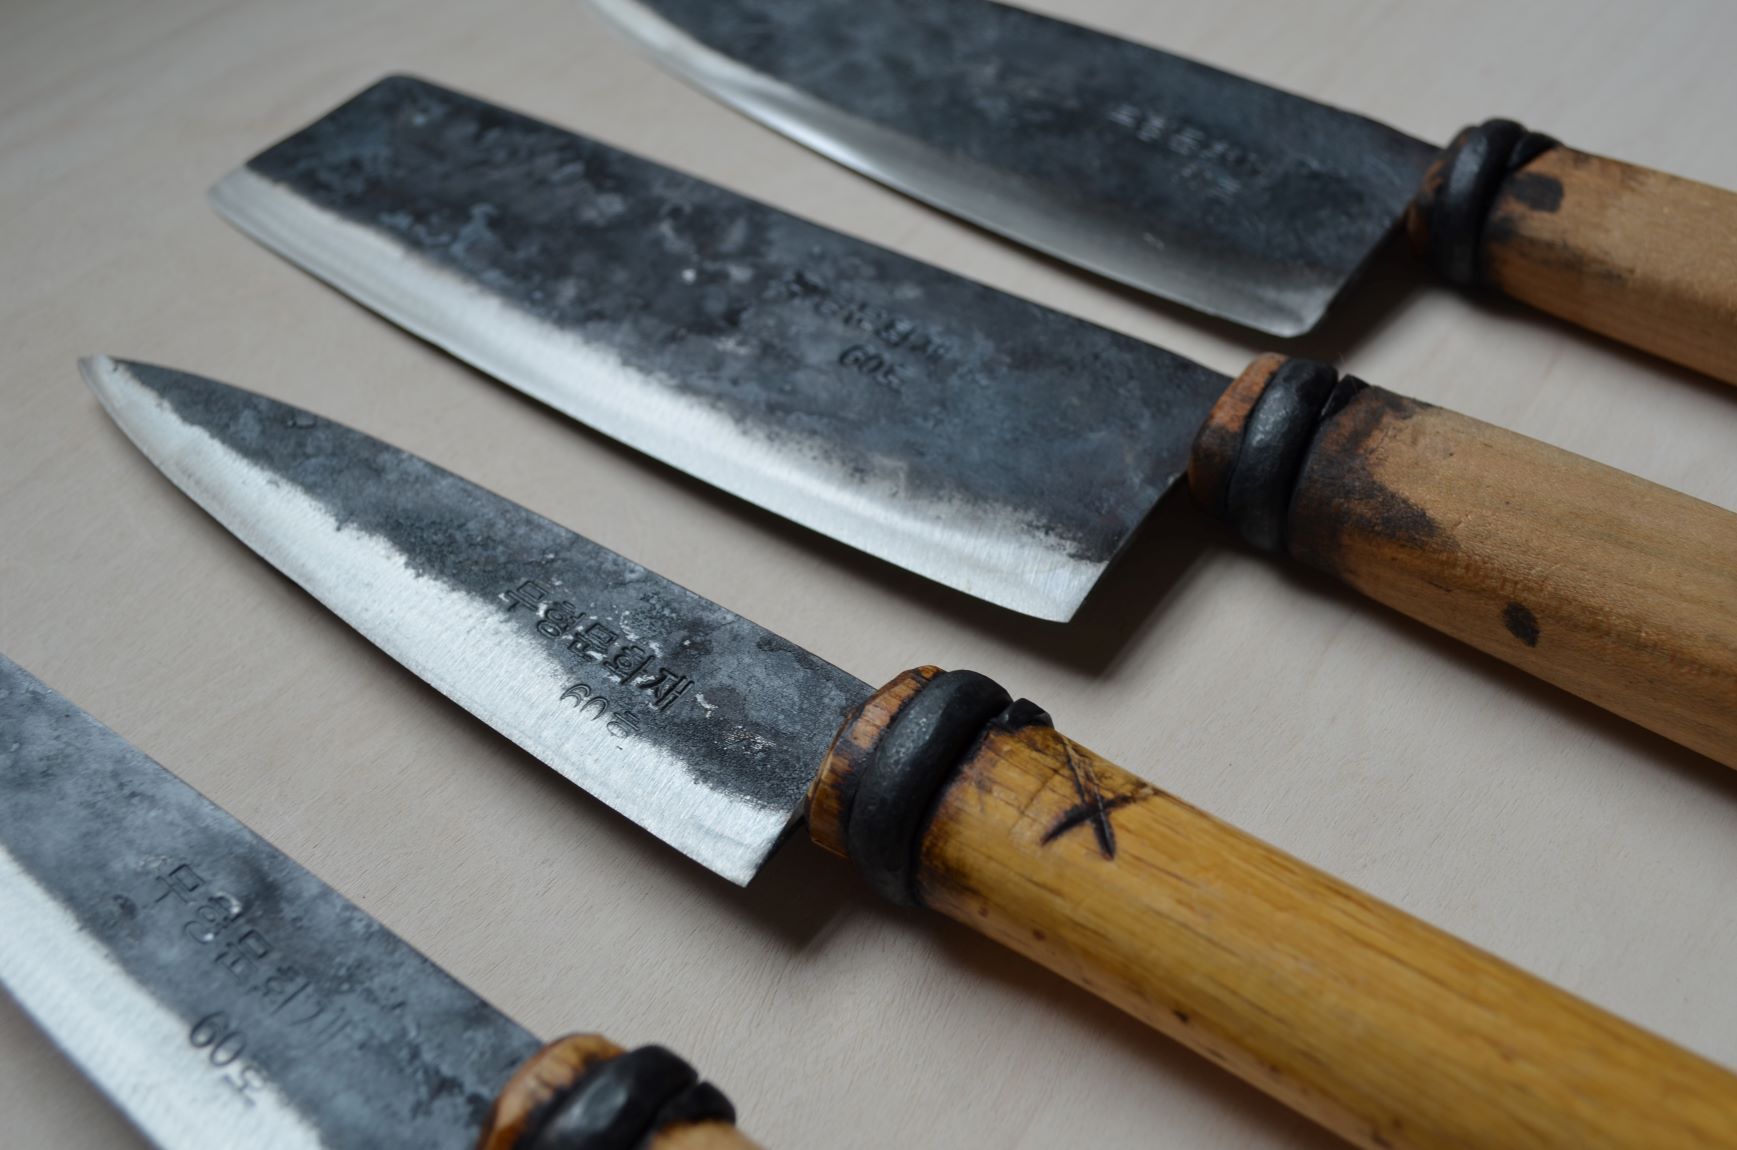 Master Shin's Anvil, detail photo of group shot of 4 knives